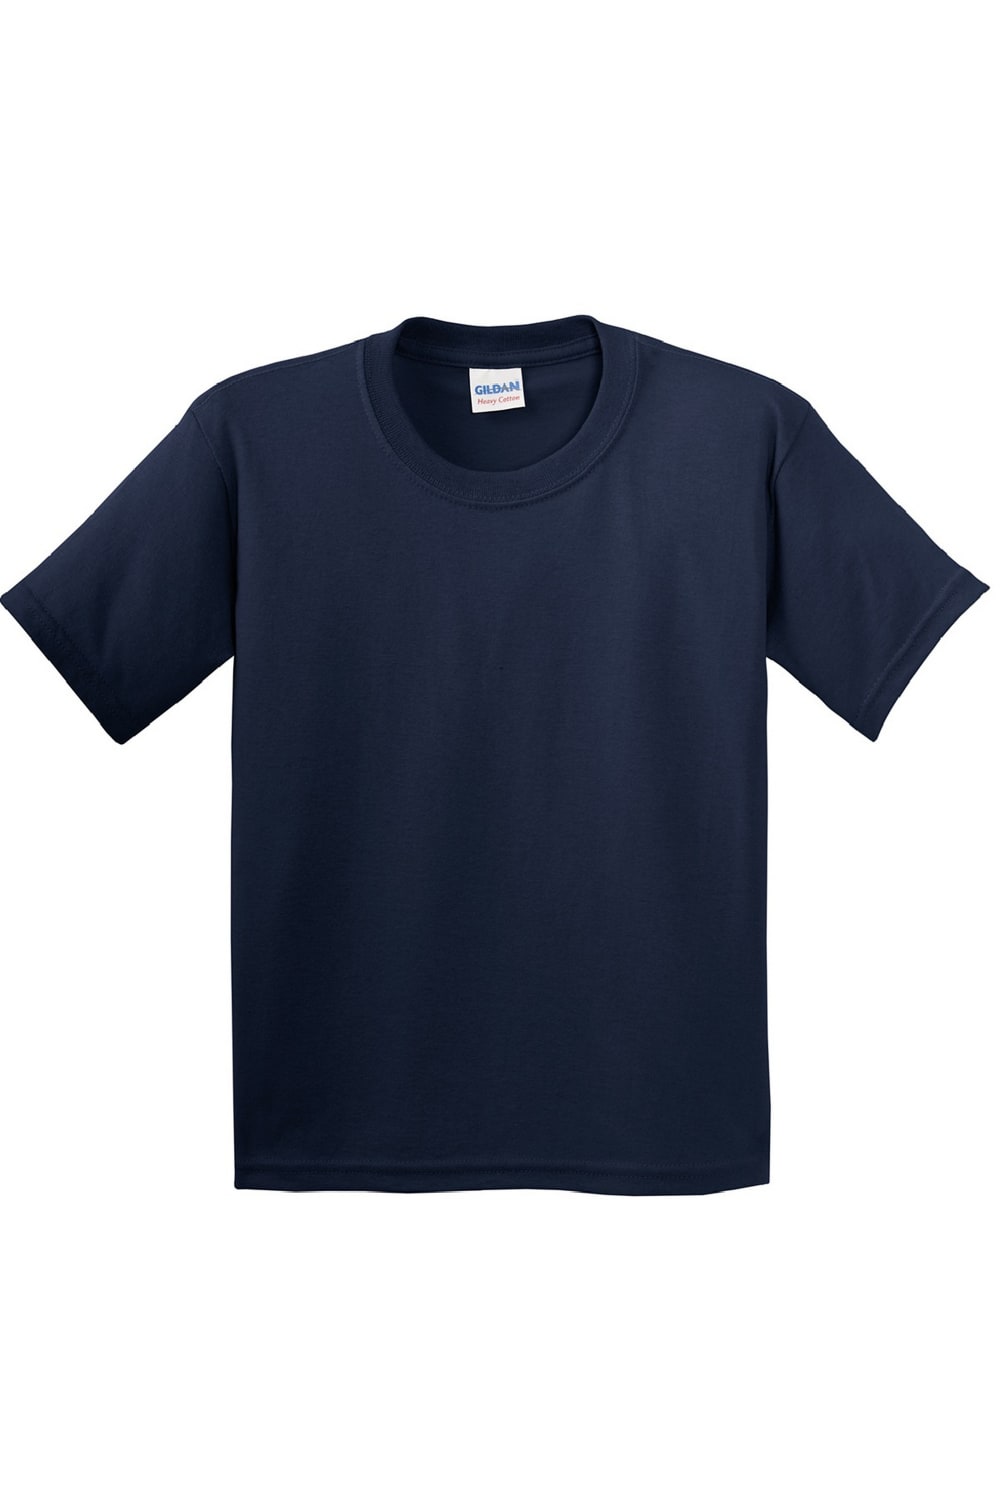 Childrens Unisex Heavy Cotton T-Shirt - Navy